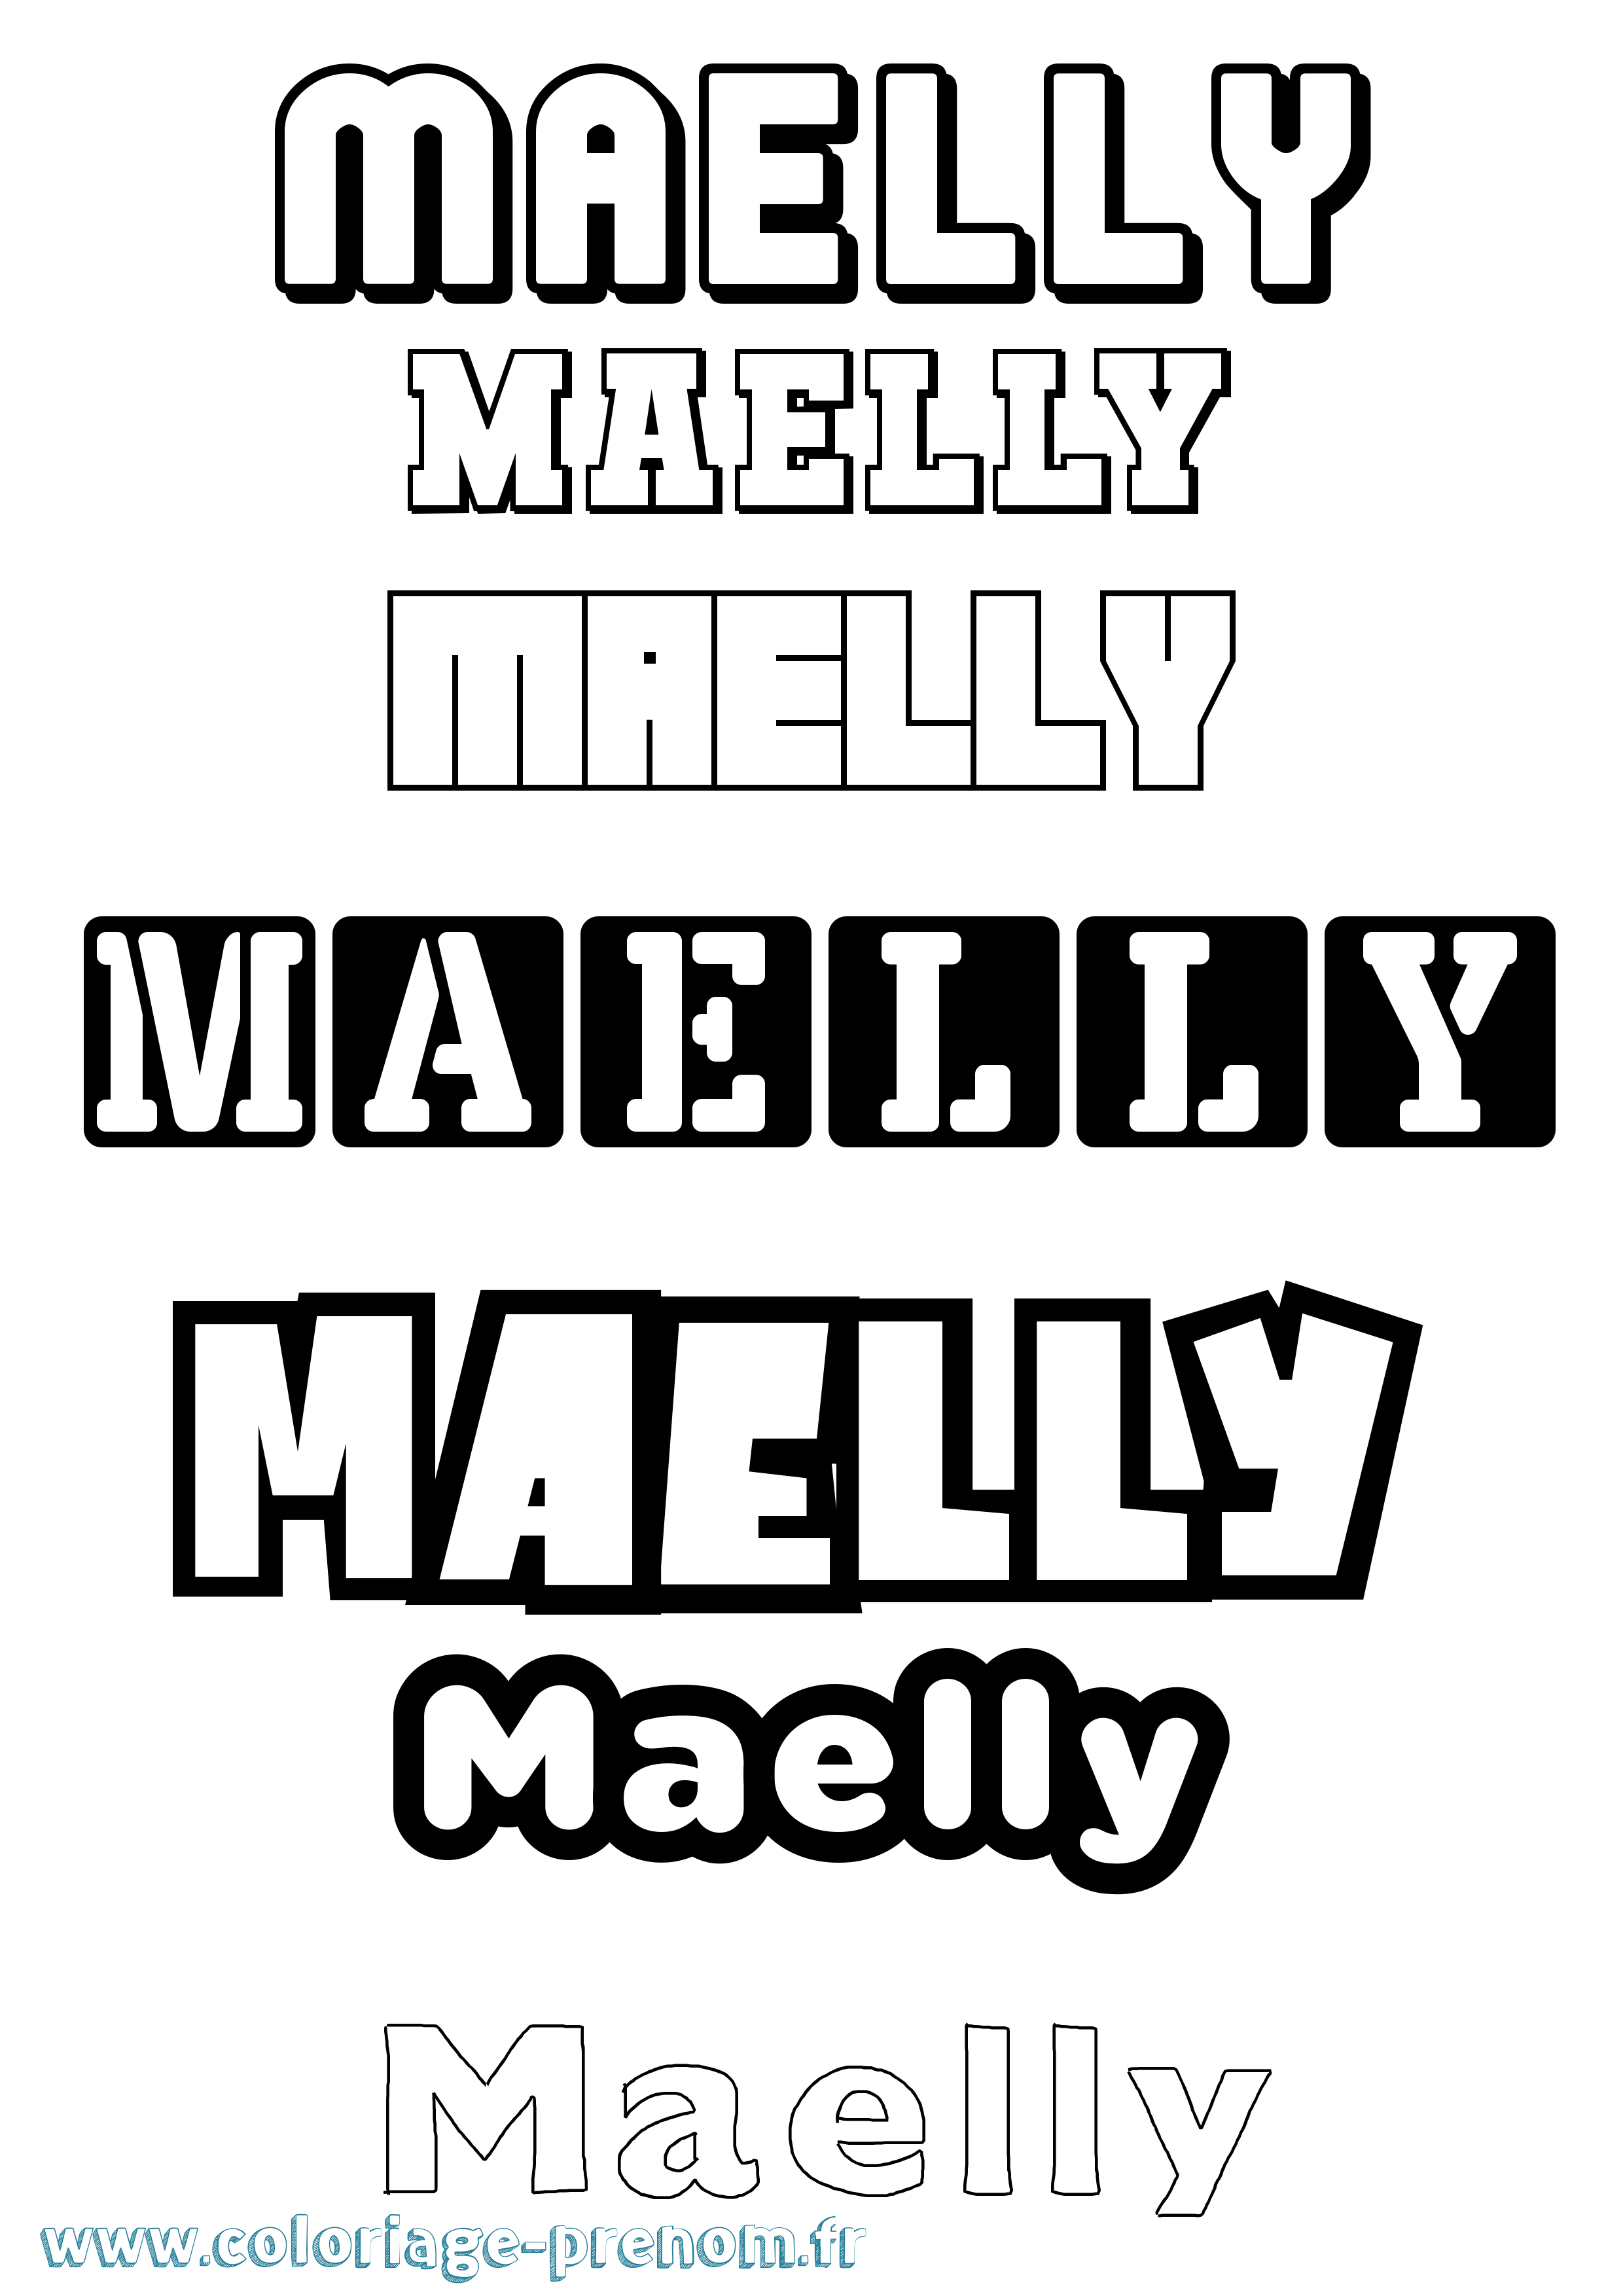 Coloriage prénom Maelly Simple